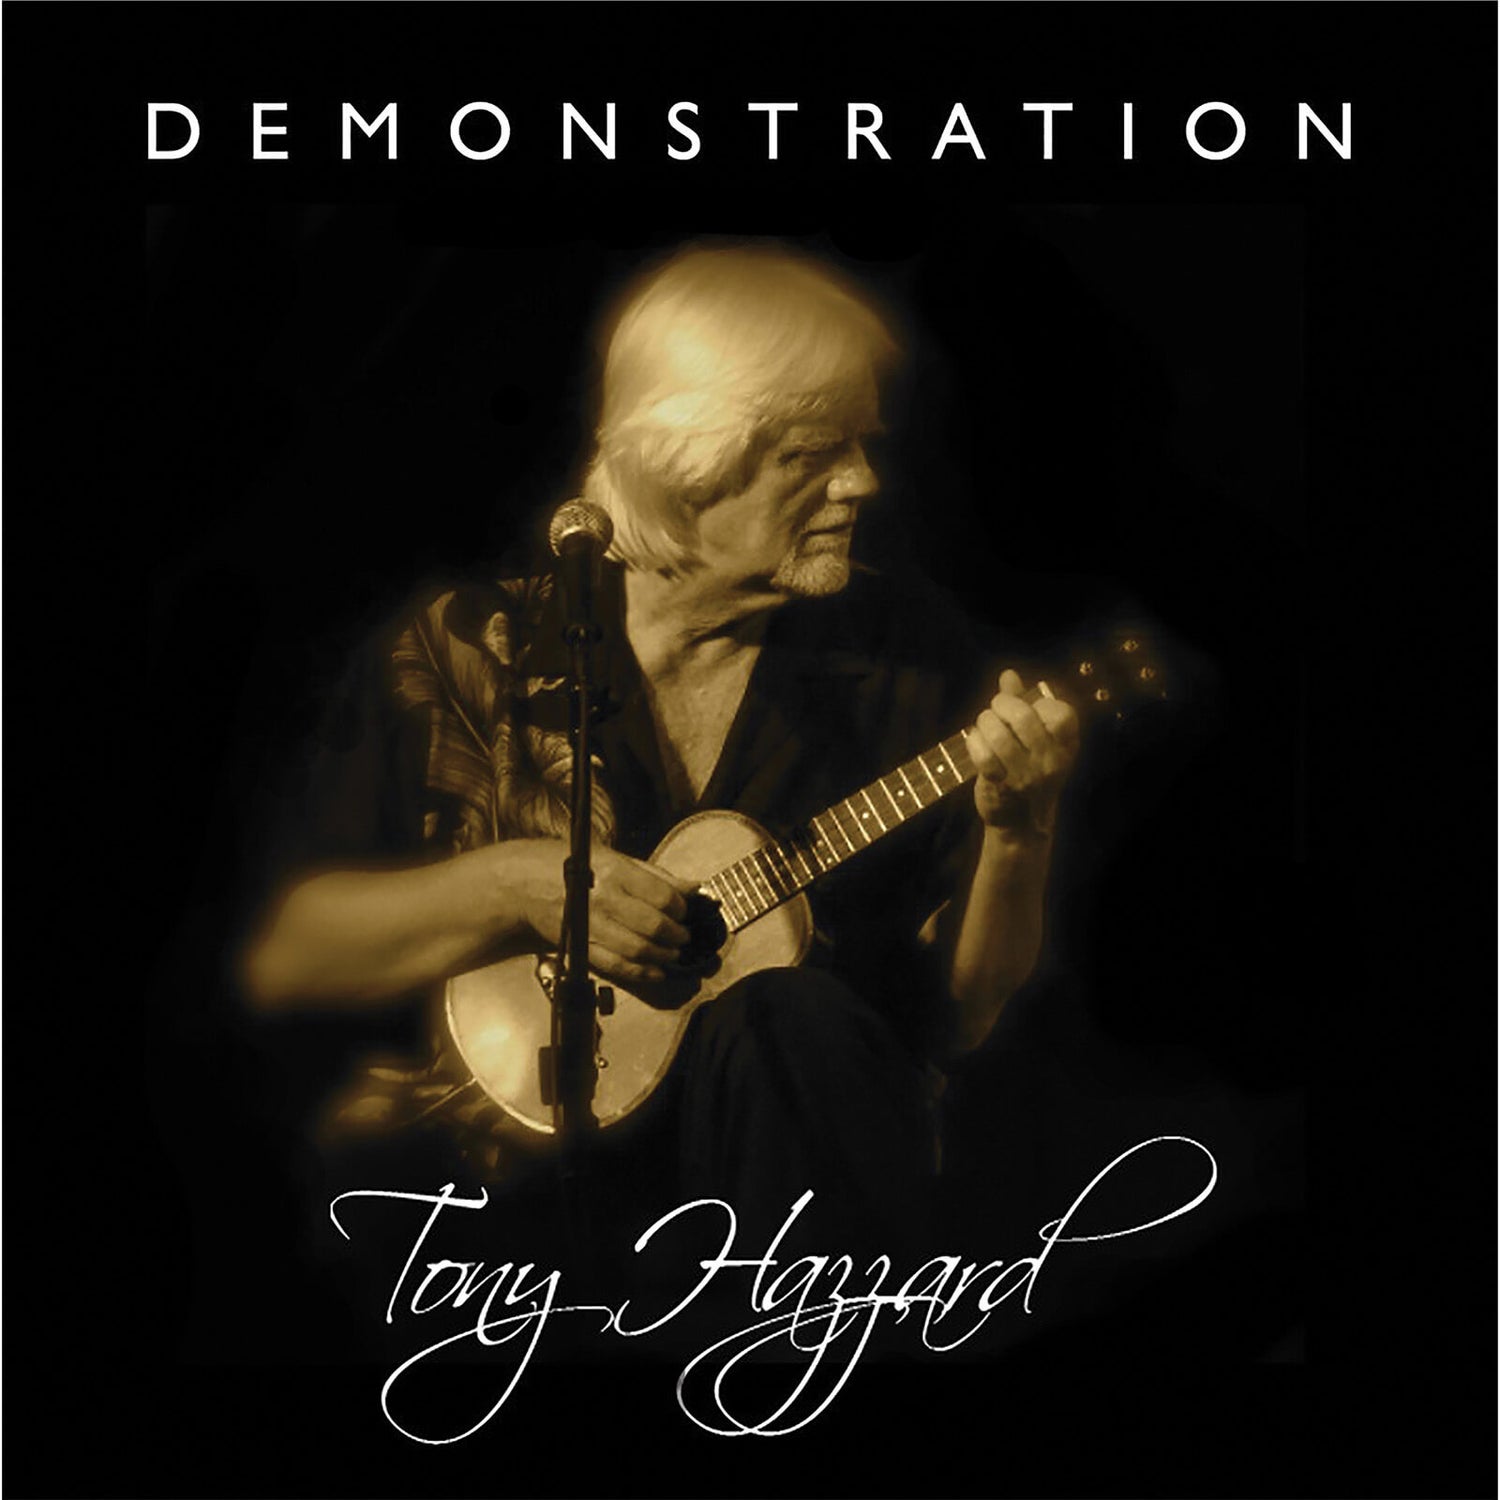 Tony Hazzard - Demonstration Vinyl